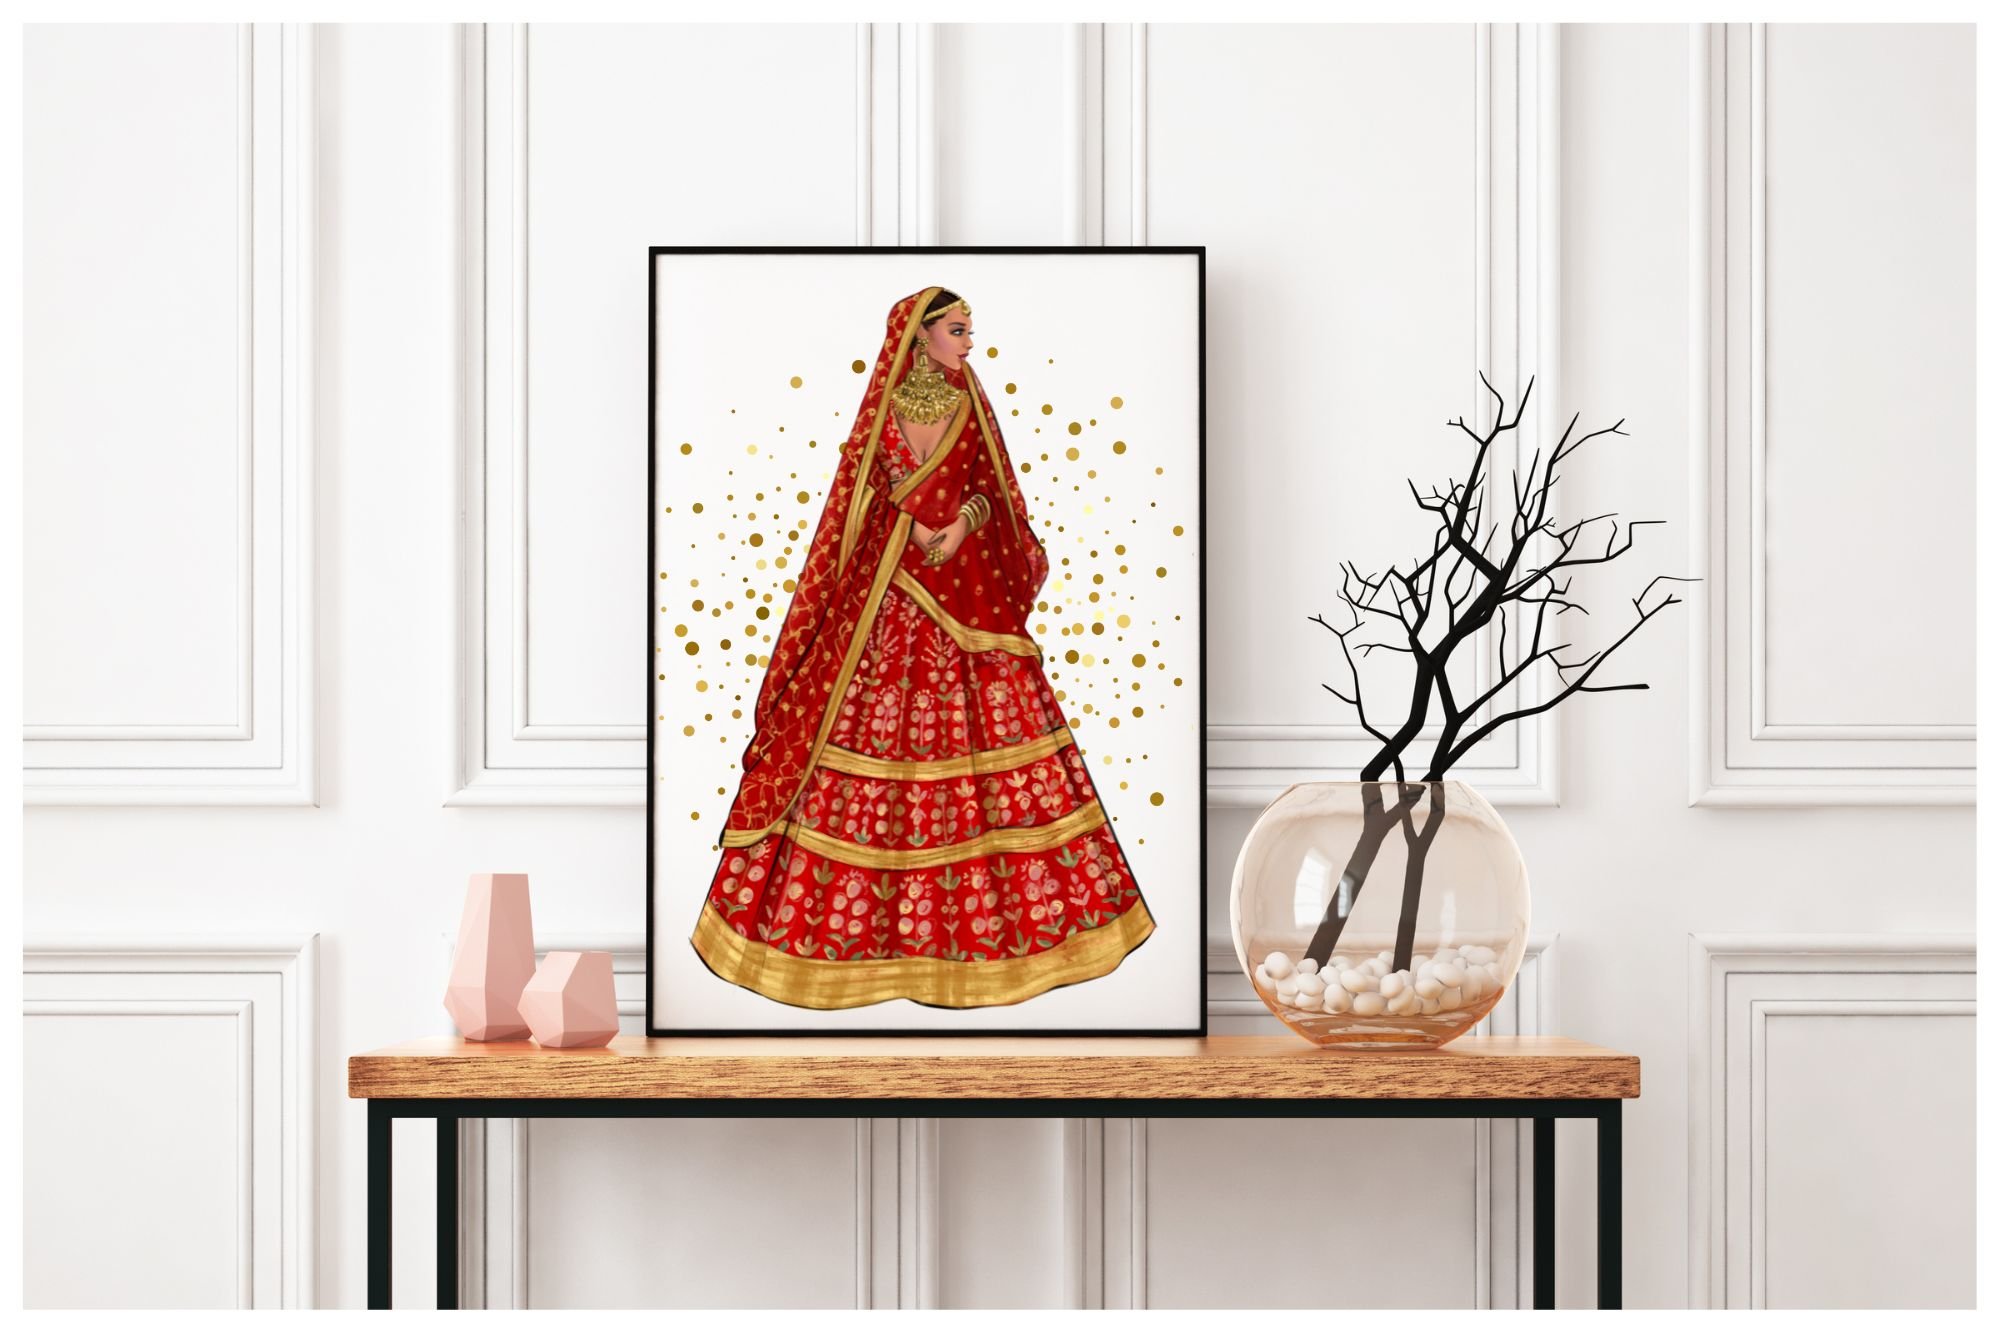 Indian bridal dress sketch | step by step sketch tutorial - YouTube